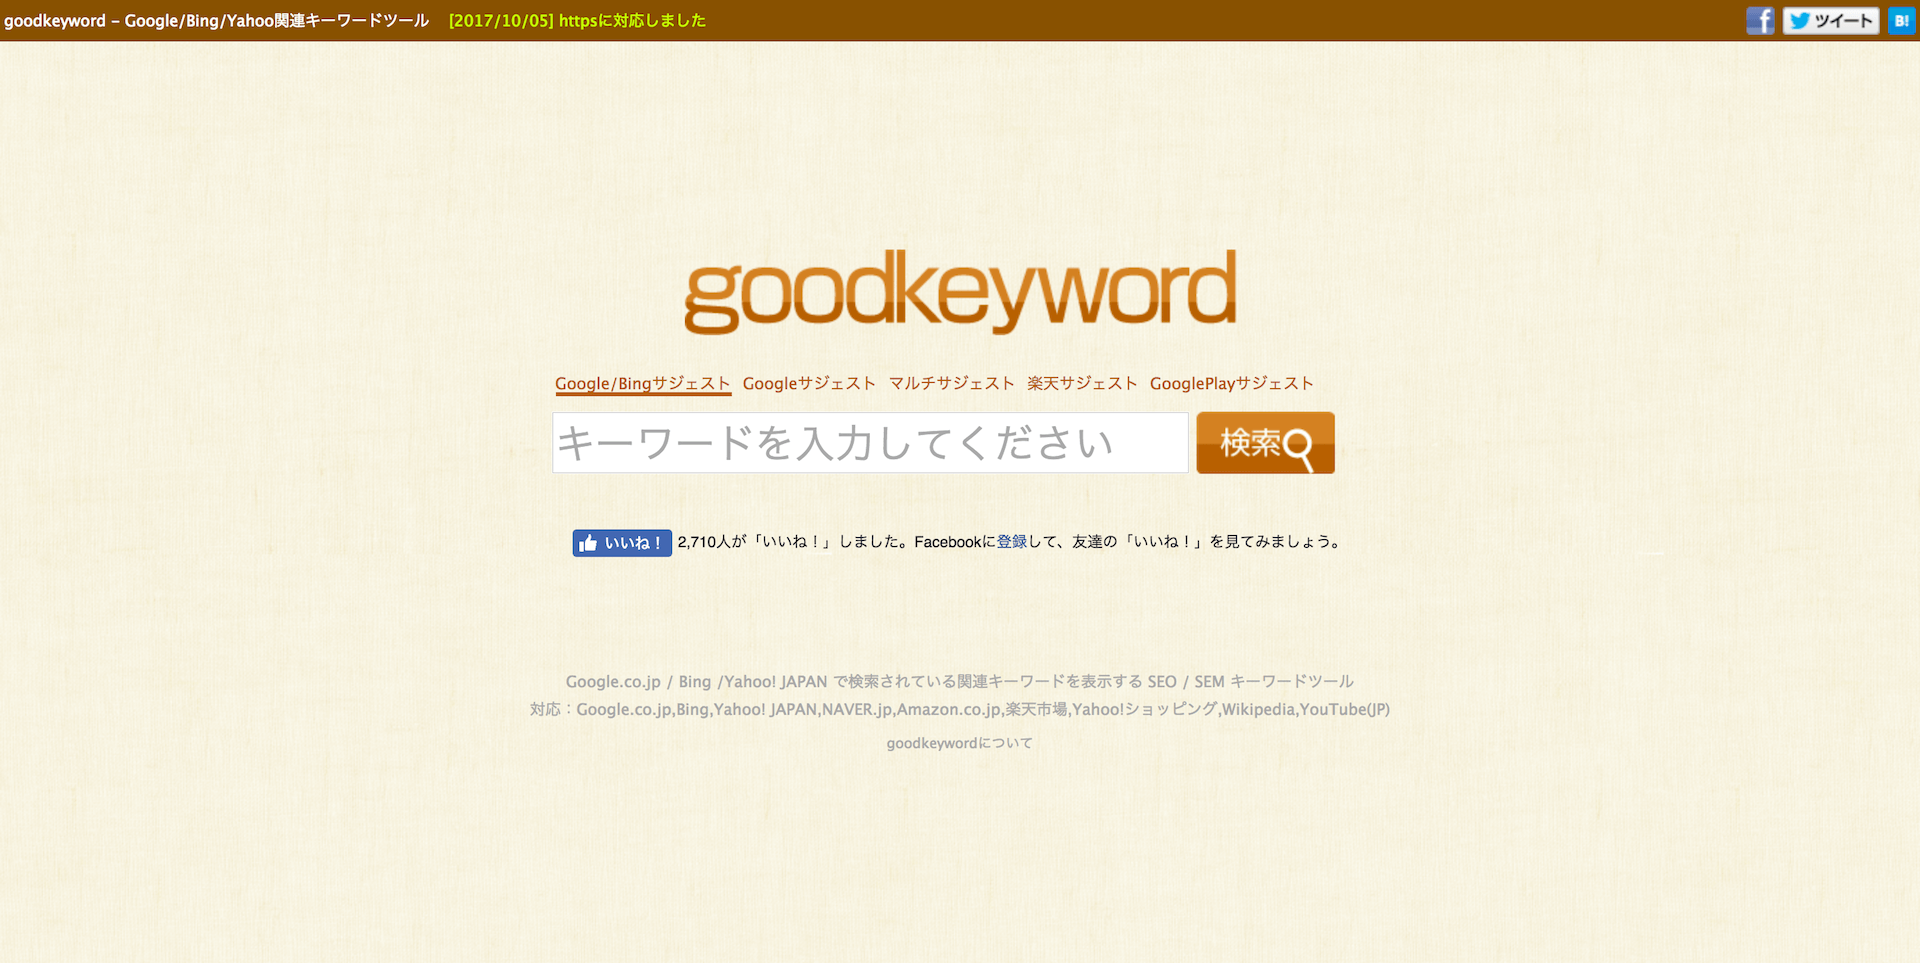 Google.co.jp / Bing /Yahoo! JAPAN で検索されている関連キーワードを表示する SEO 